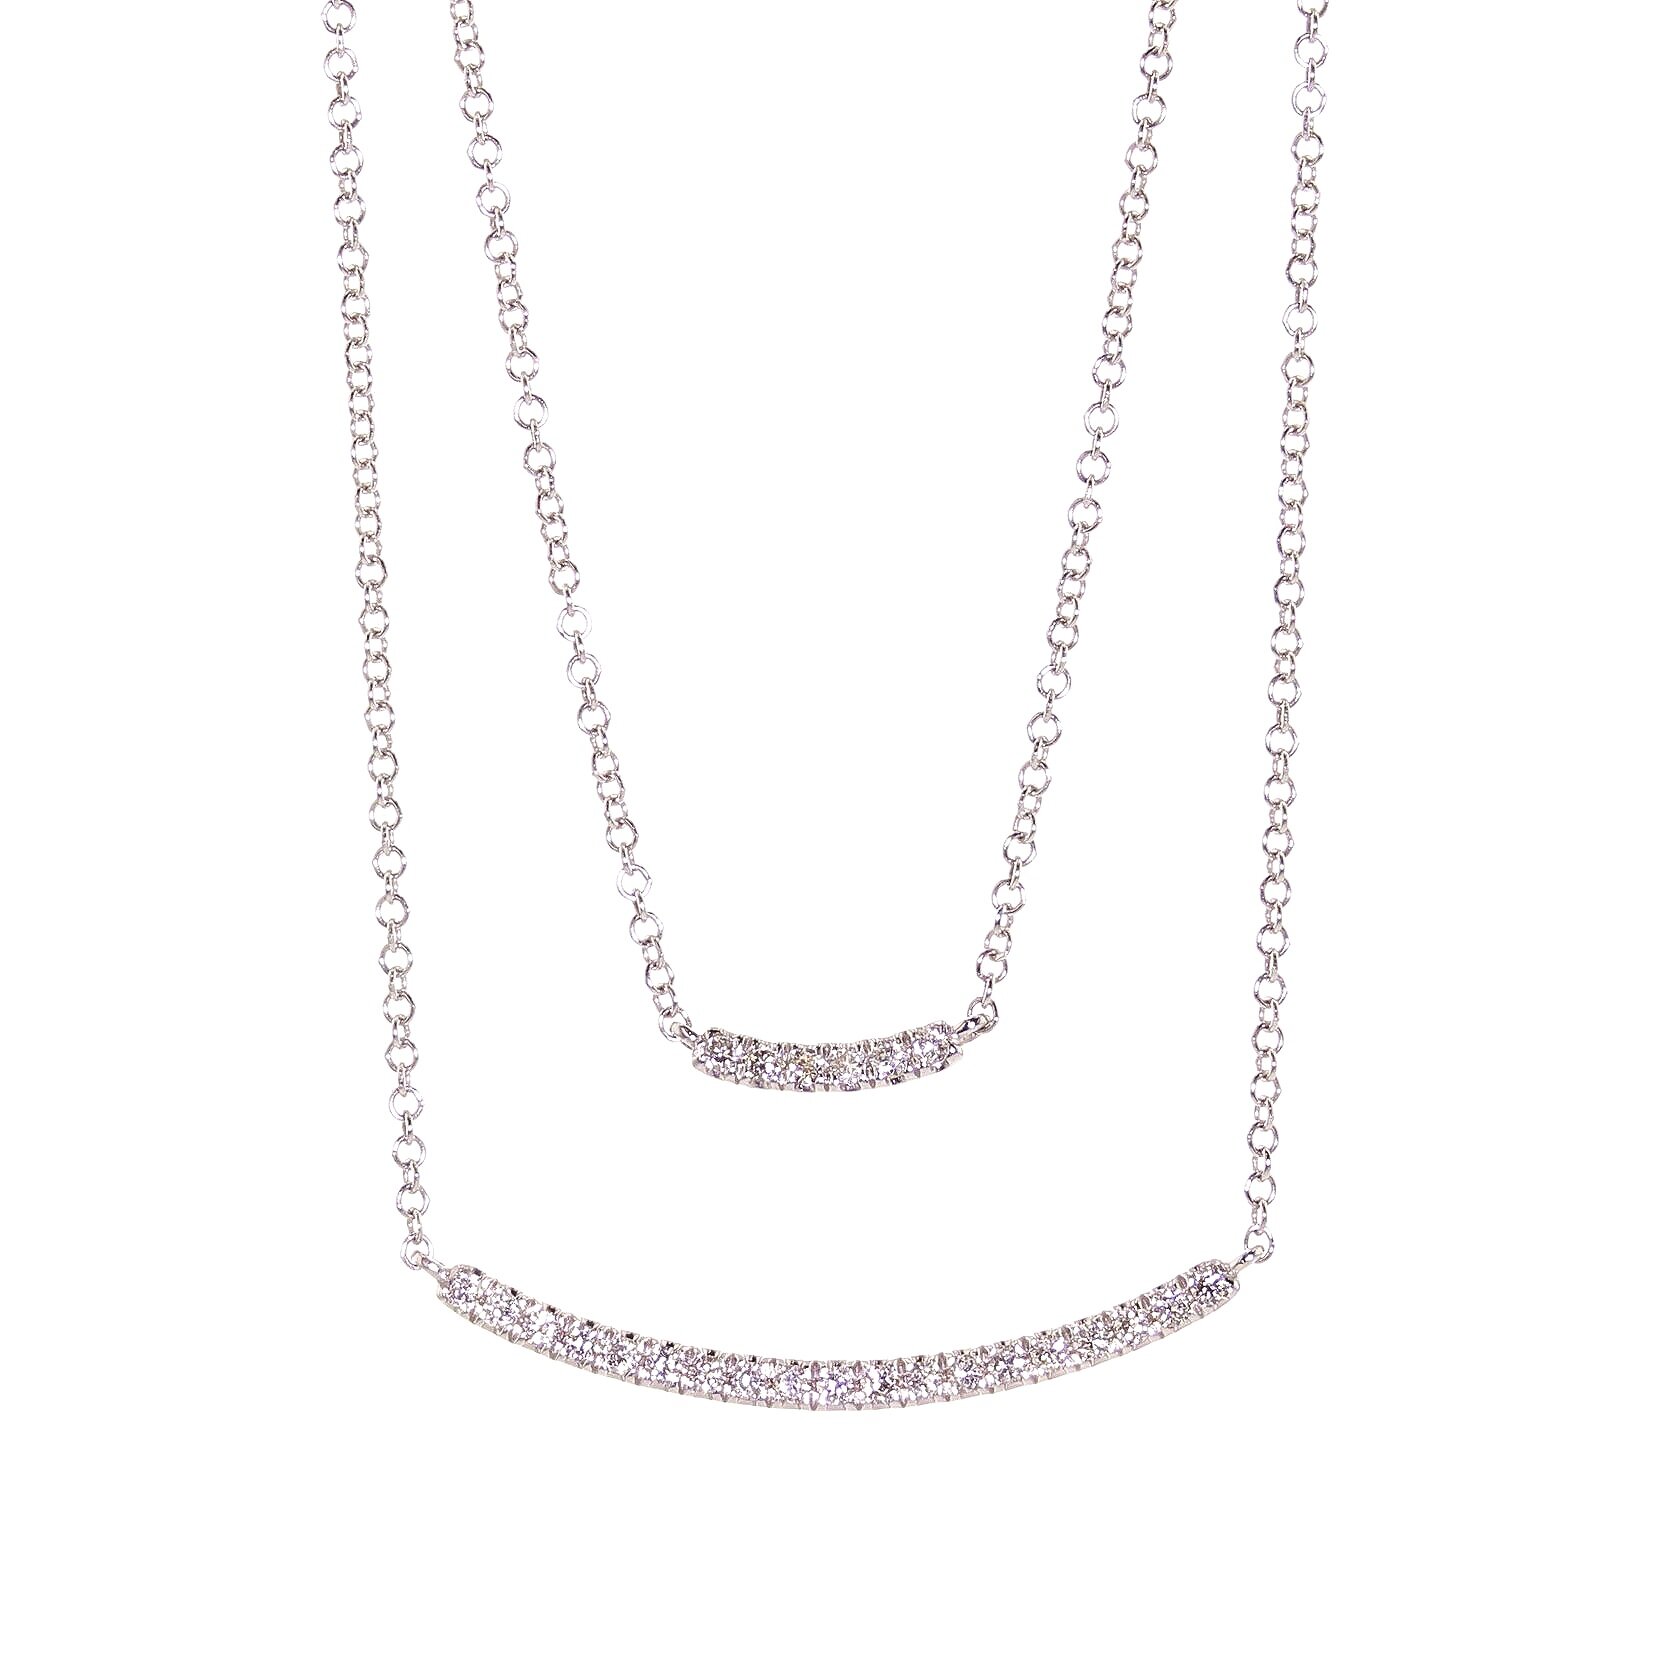 !4K White Gold "Double Bar" Diamond Pave necklace. $1650